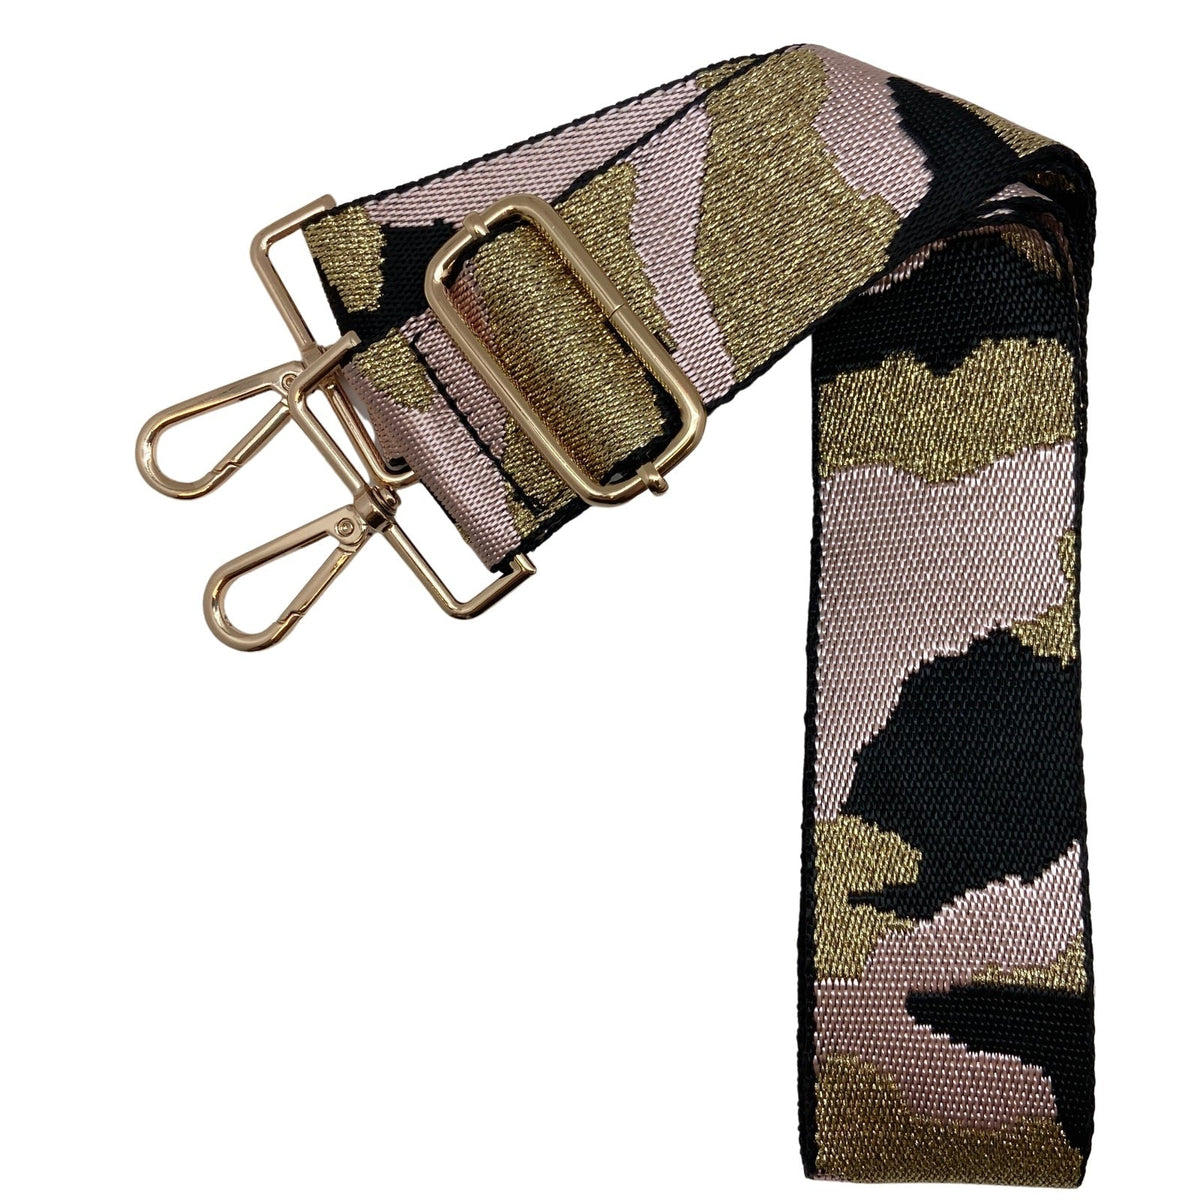 Adjustable Bag Strap in Metallic Camo